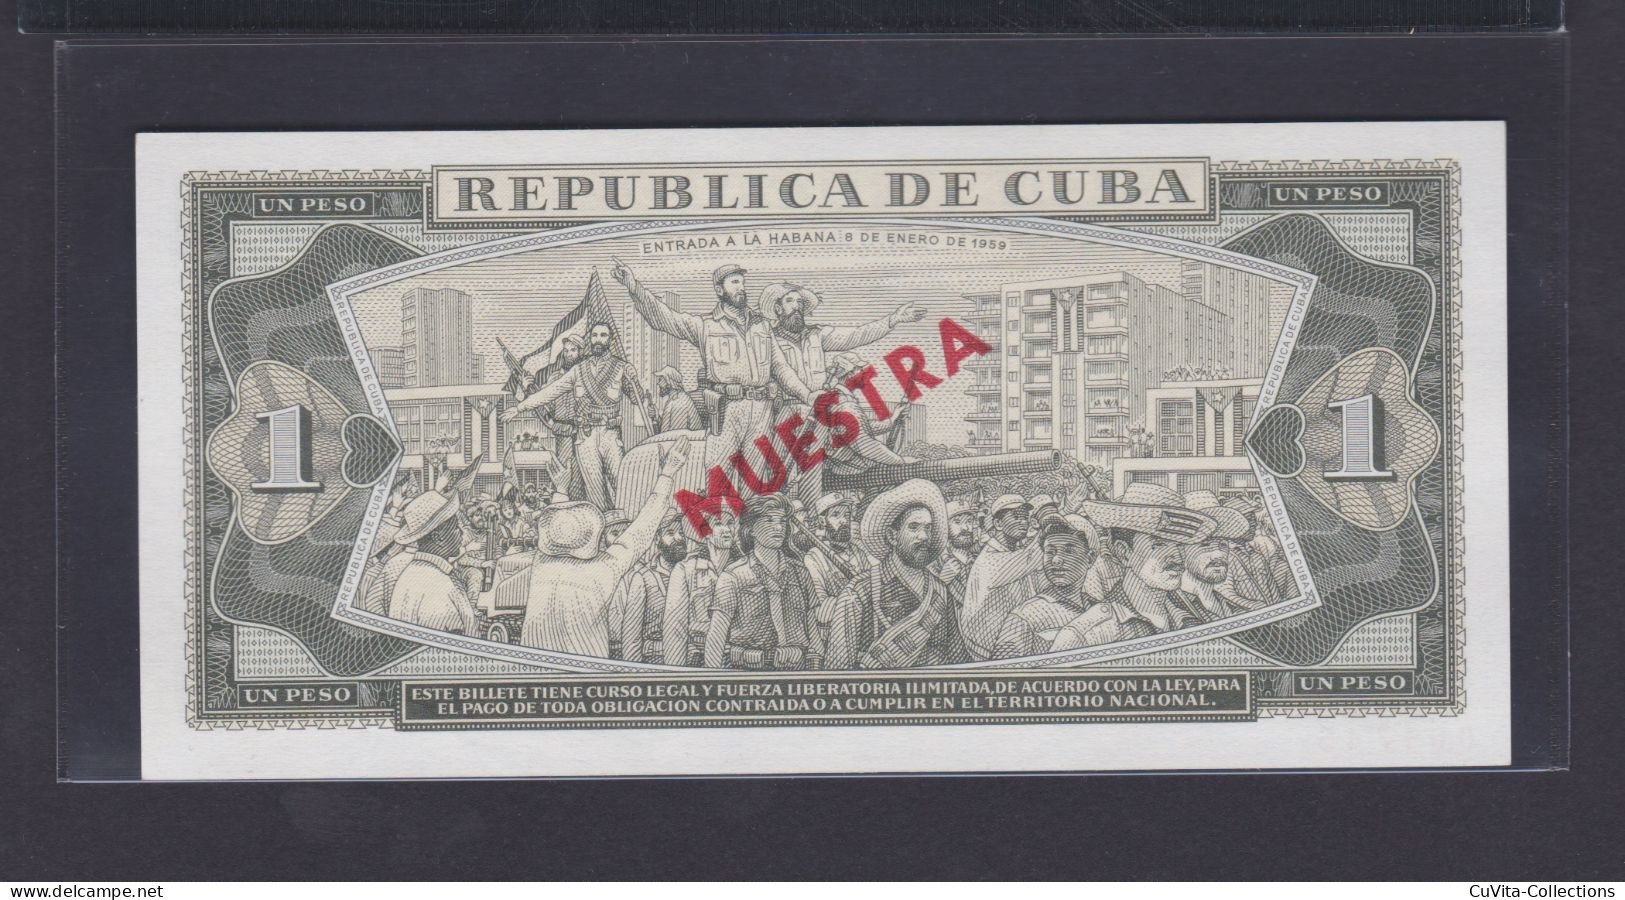 1 PESO 1982 UNC / SC MUESTRA - Cuba